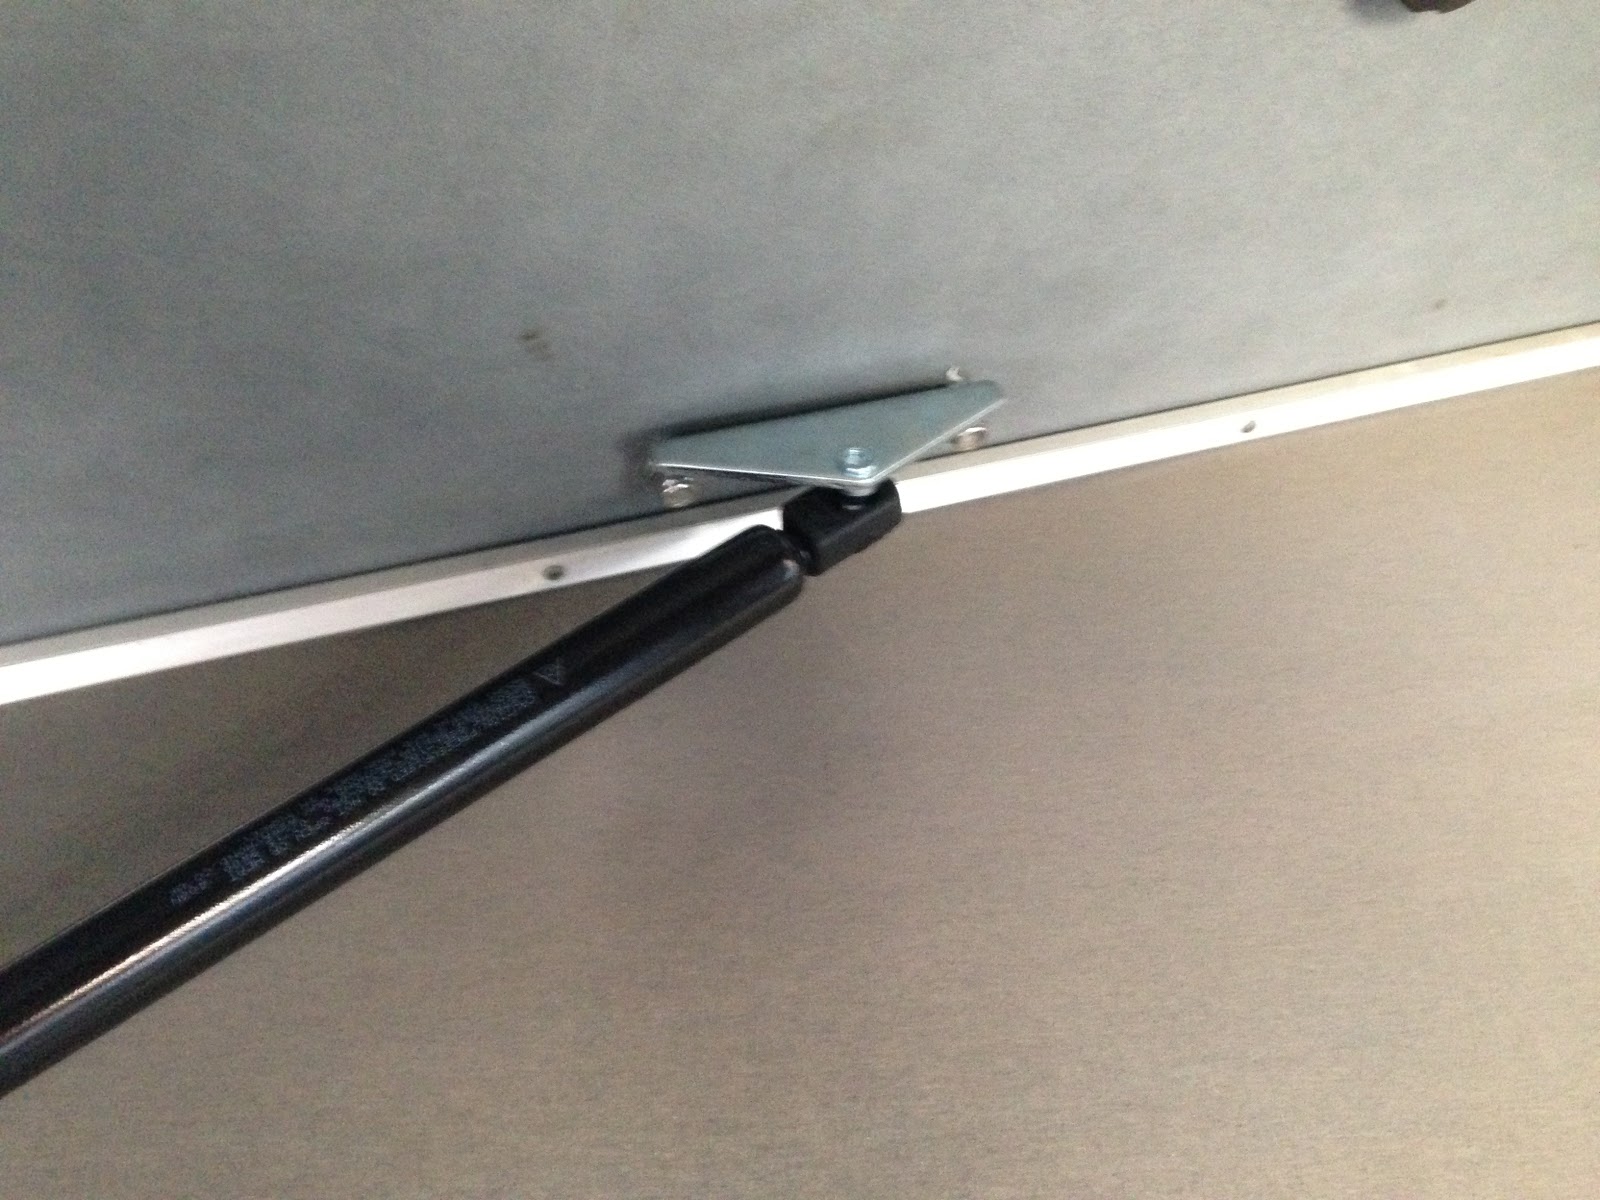 Poptop lift assist struts installed